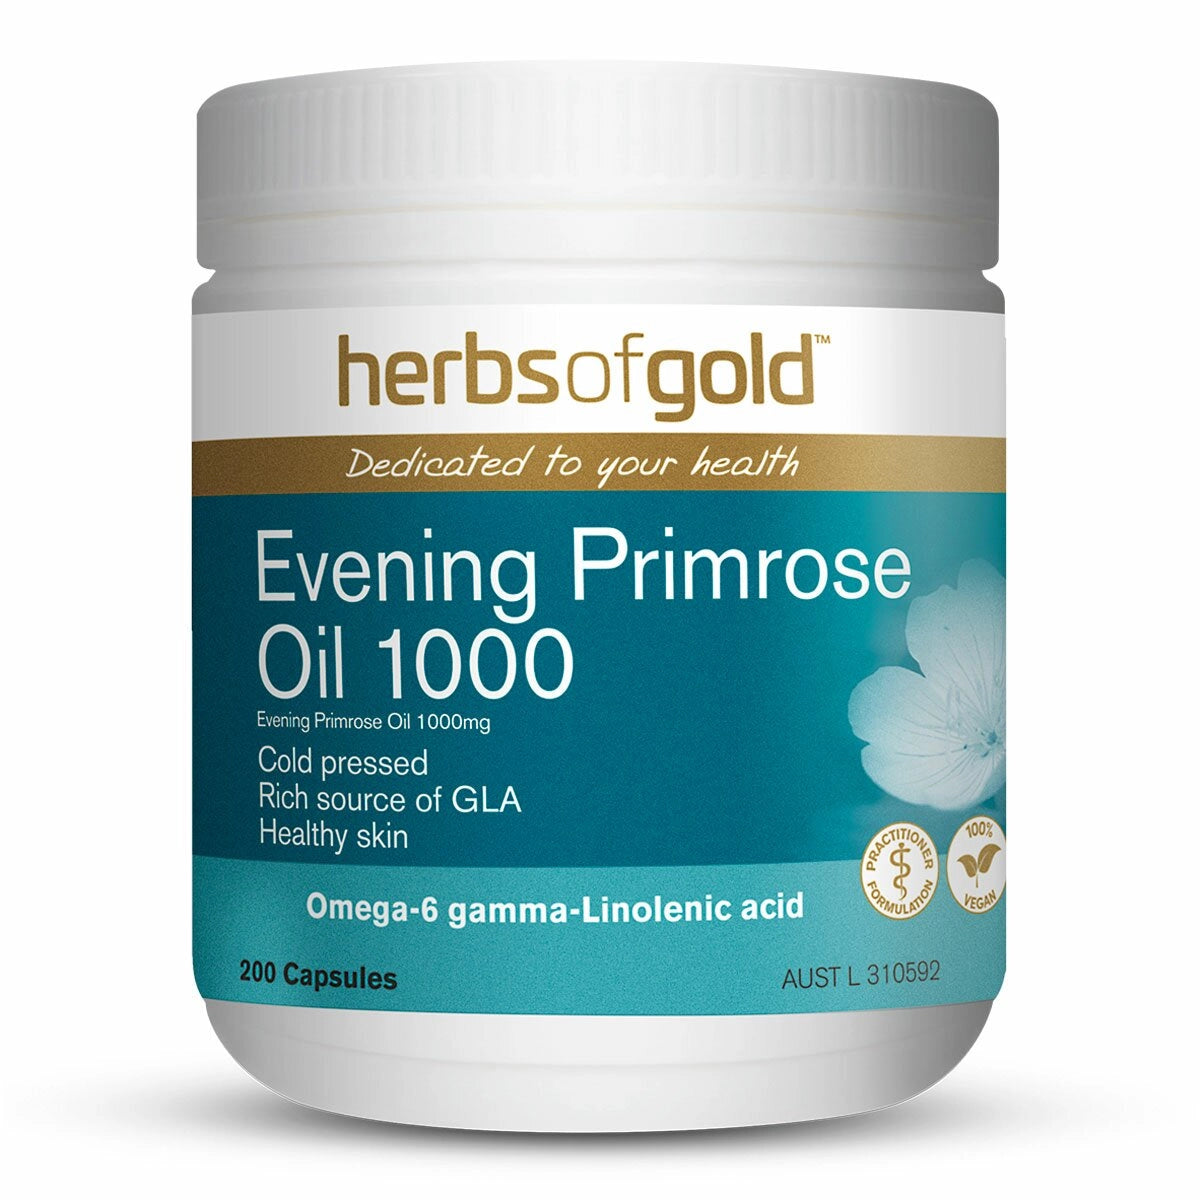 Evening Primrose Oil 1000 Herbs of Gold